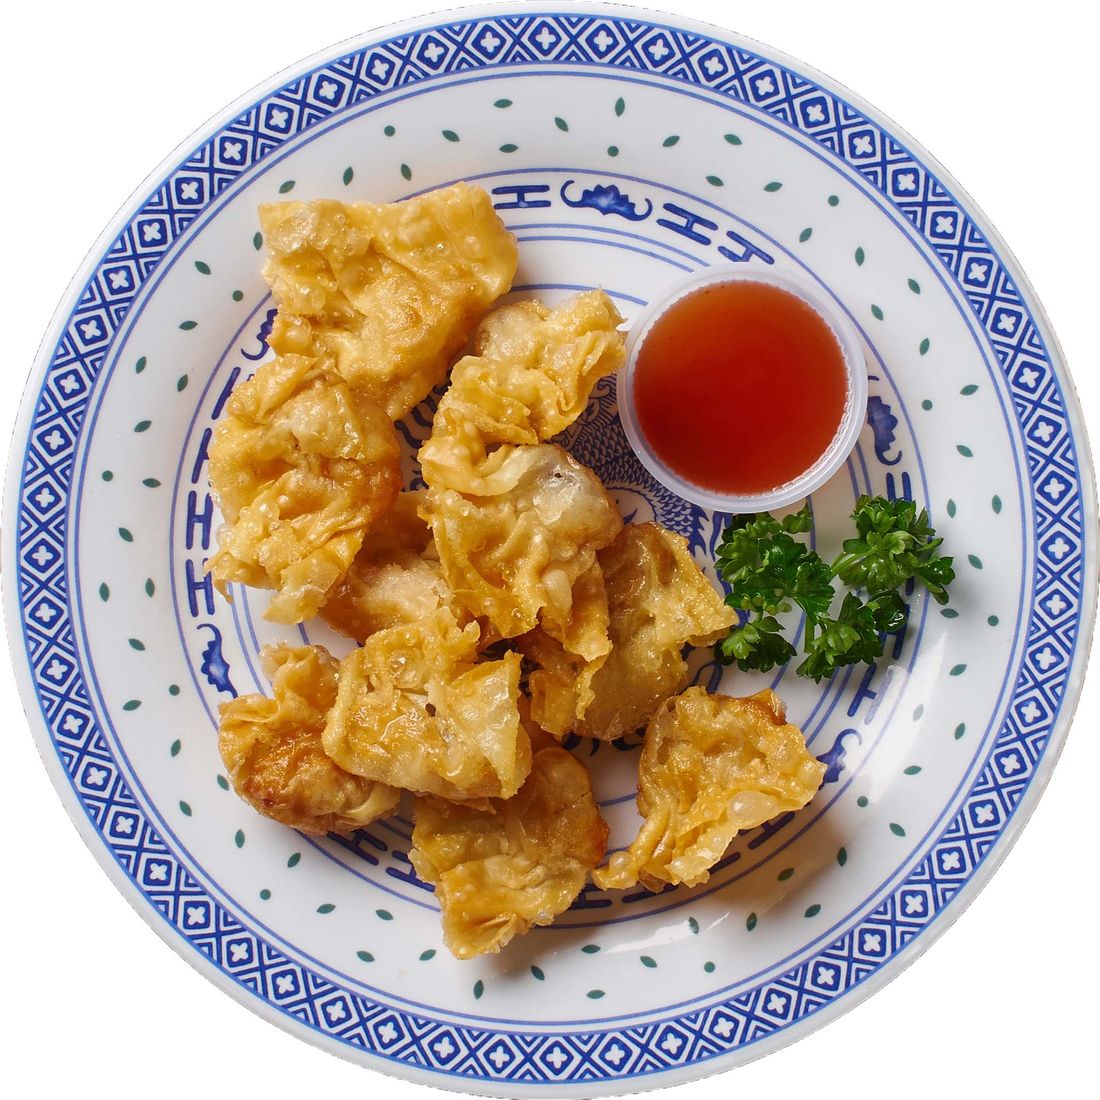 Frittierte Wanton - Kilin Palast China Food in Lachen